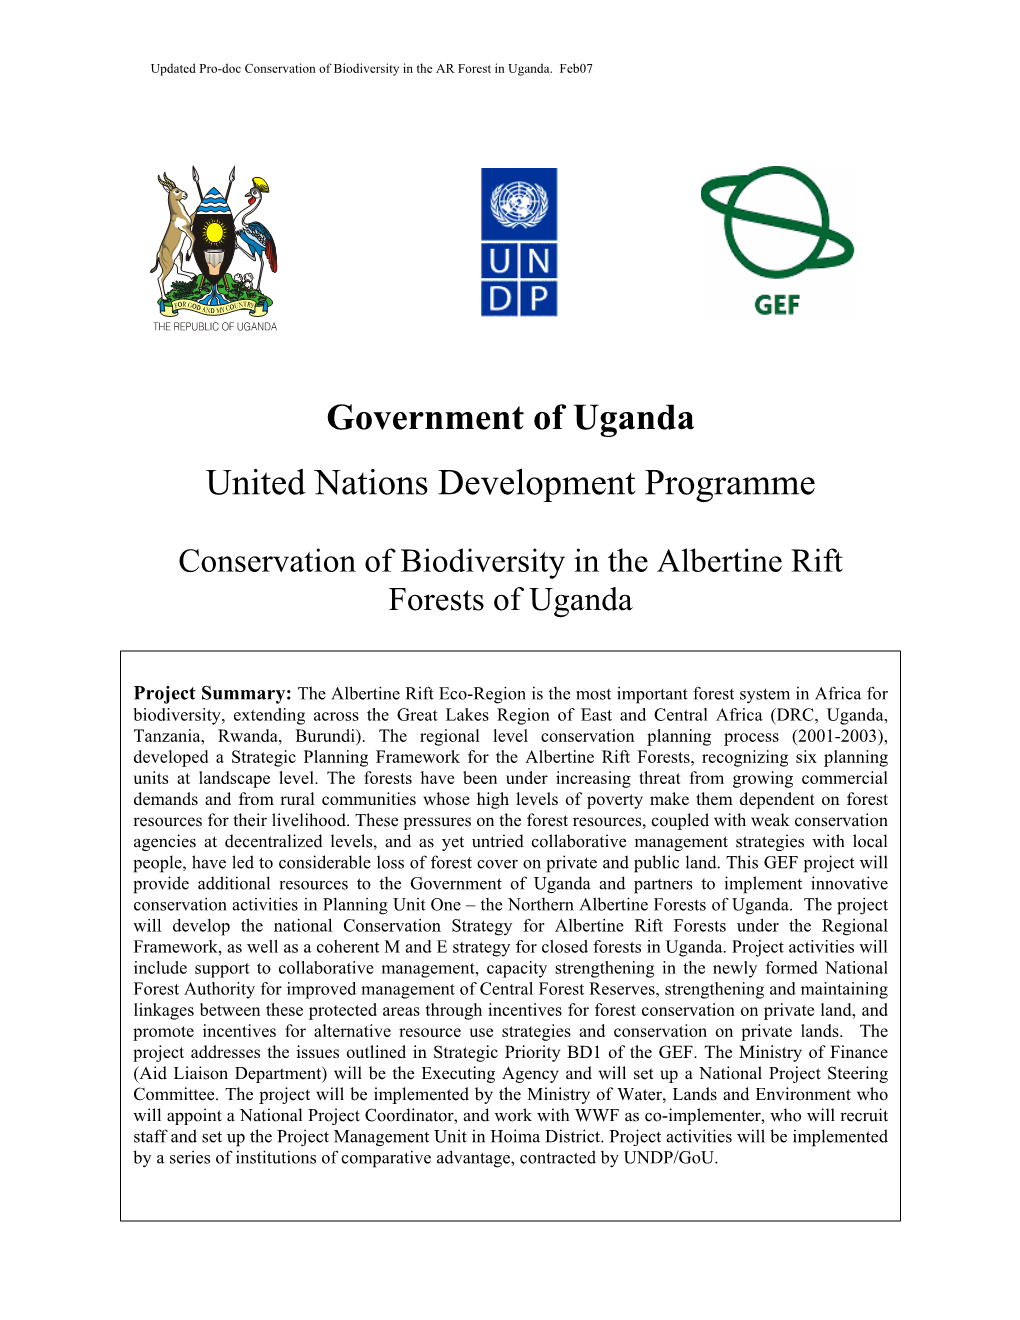 Government of Uganda United Nations Development Programme